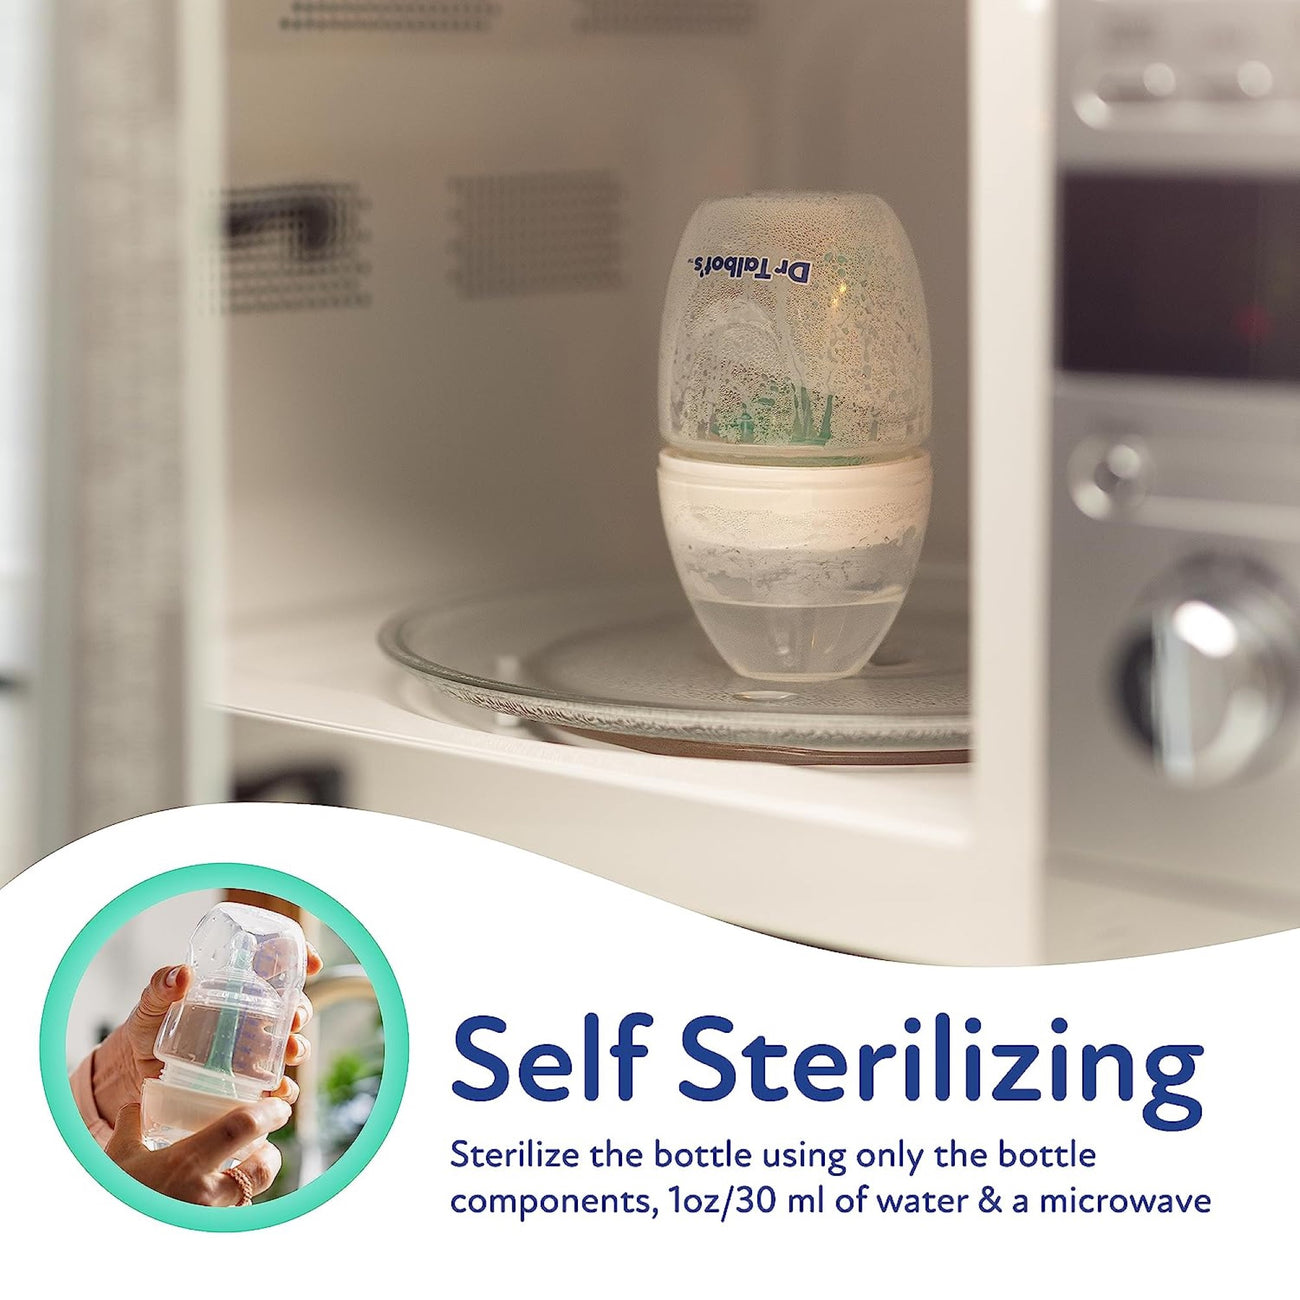 Self-Sterilizing Anti-Colic Bottle with Bonus Pacifier (4 Pack) - 6 oz